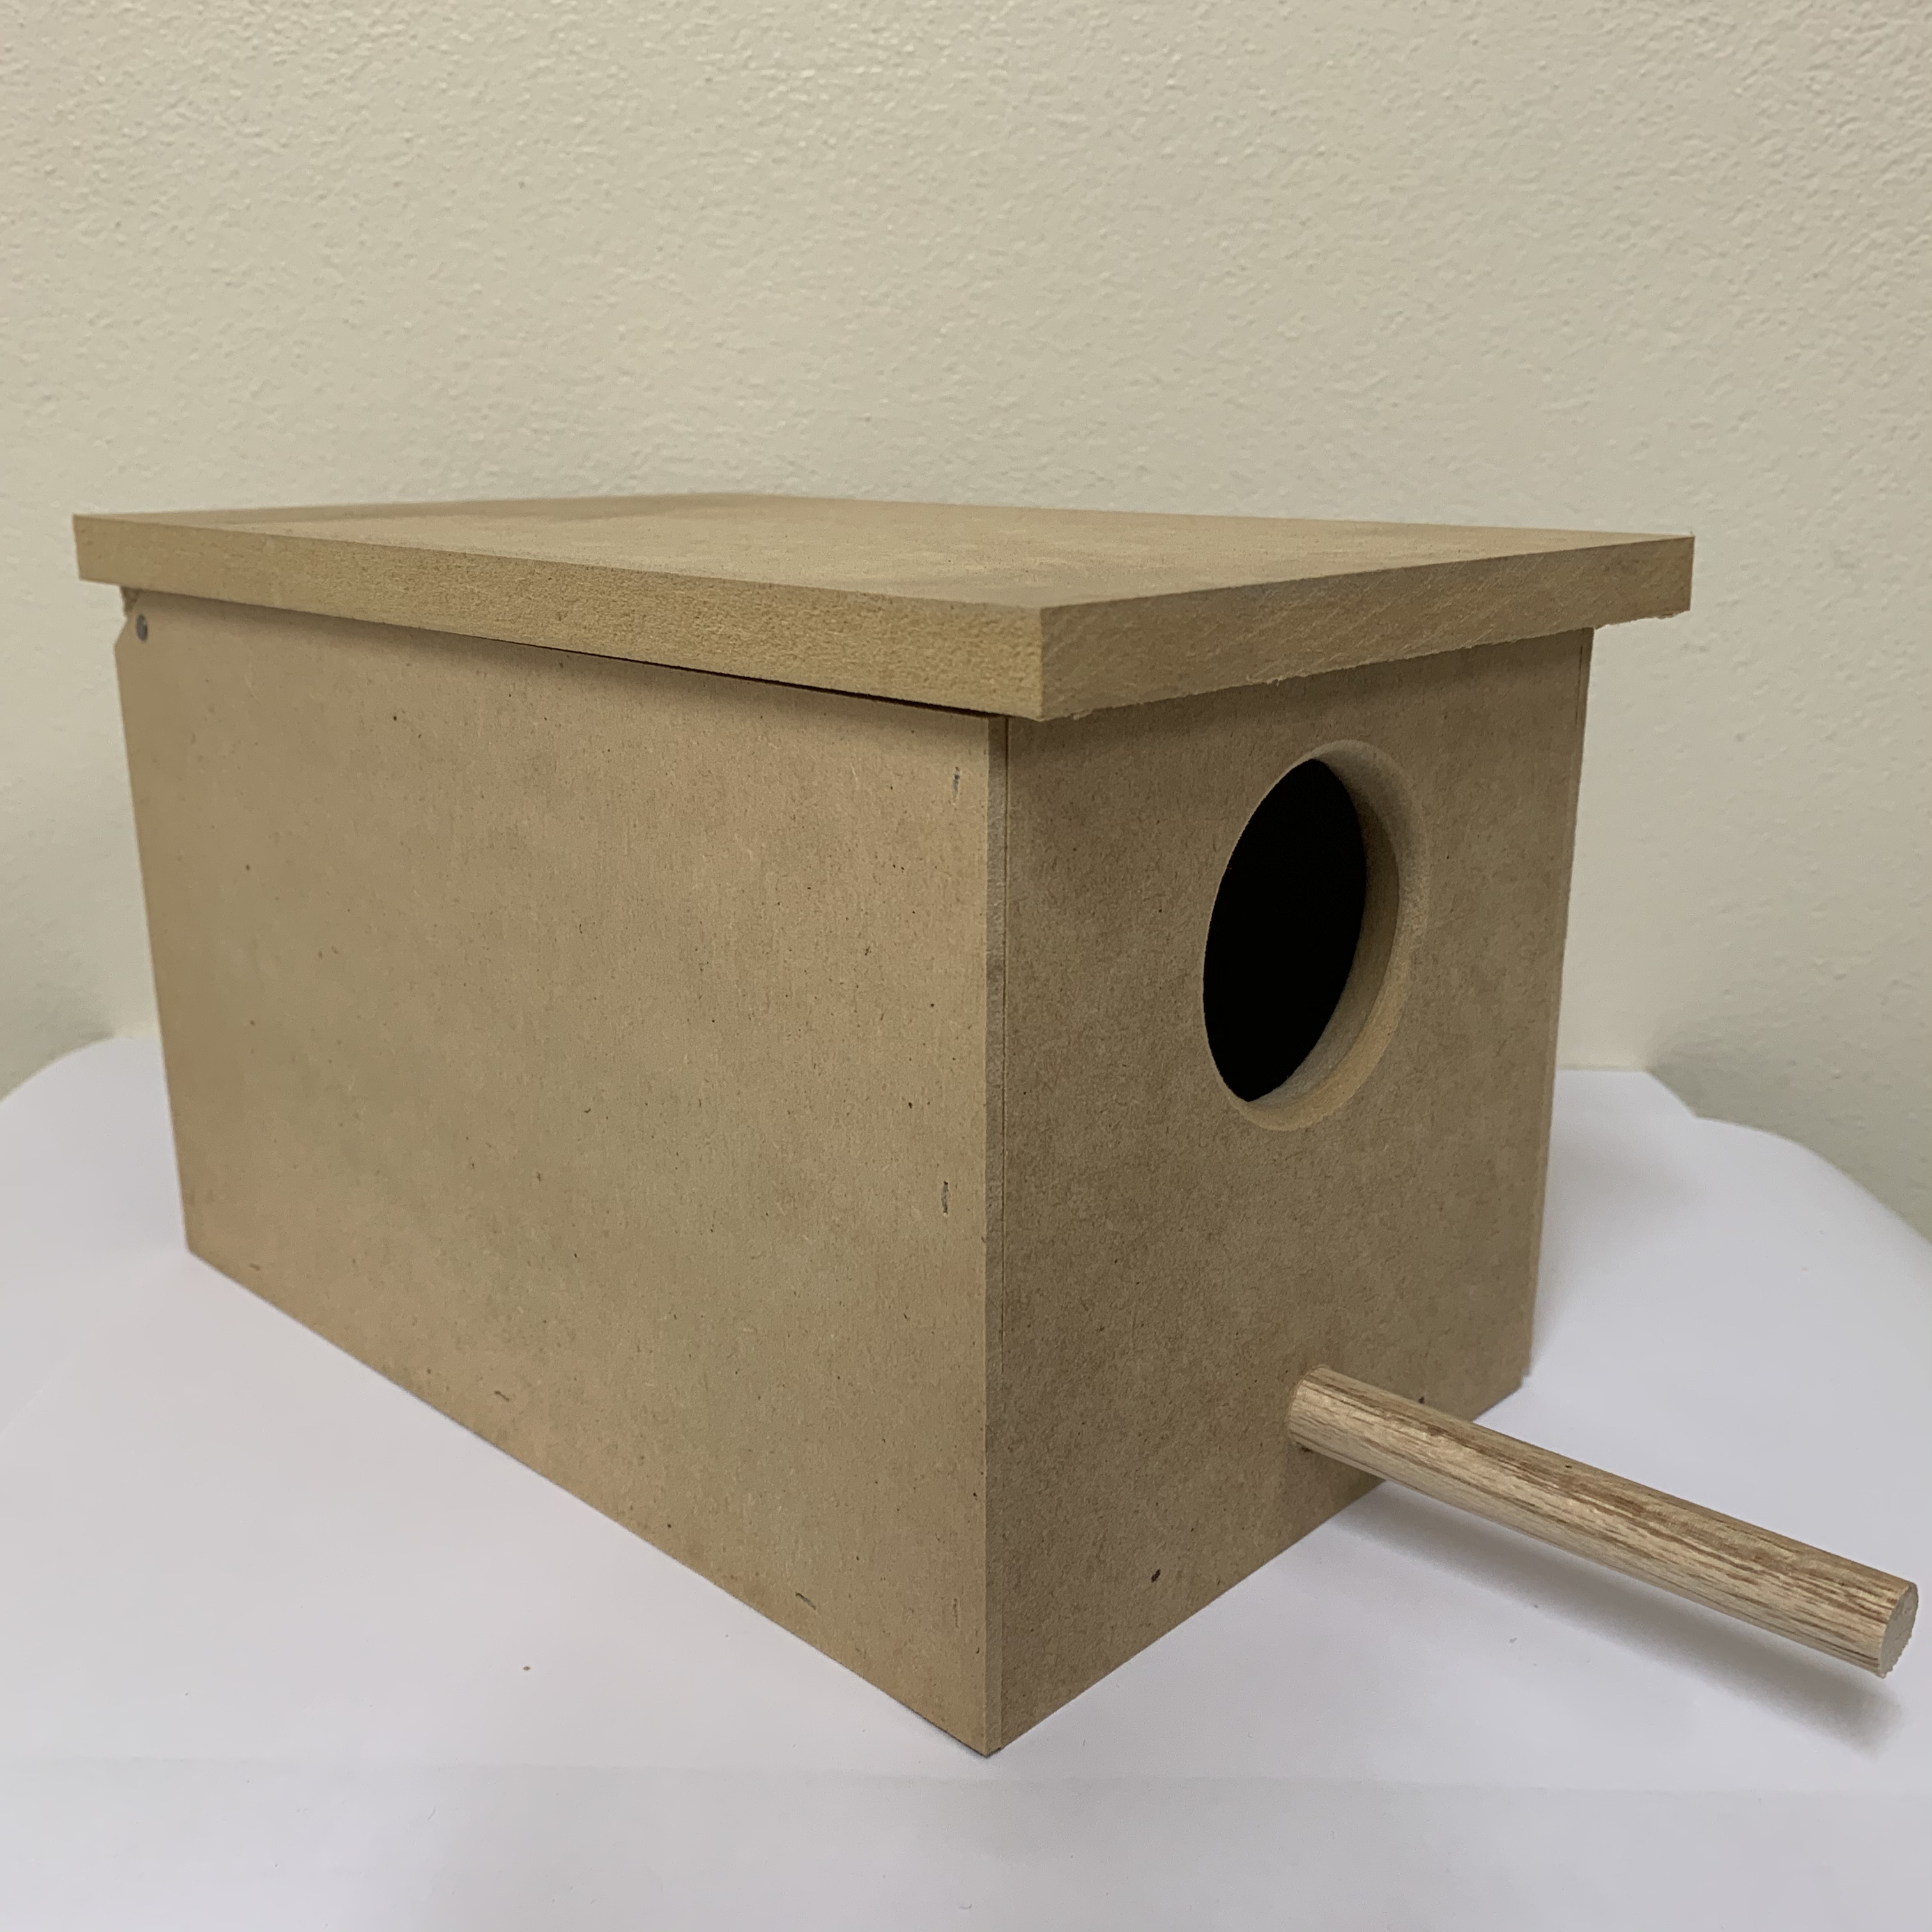 Wooden Budgie nest box w perch